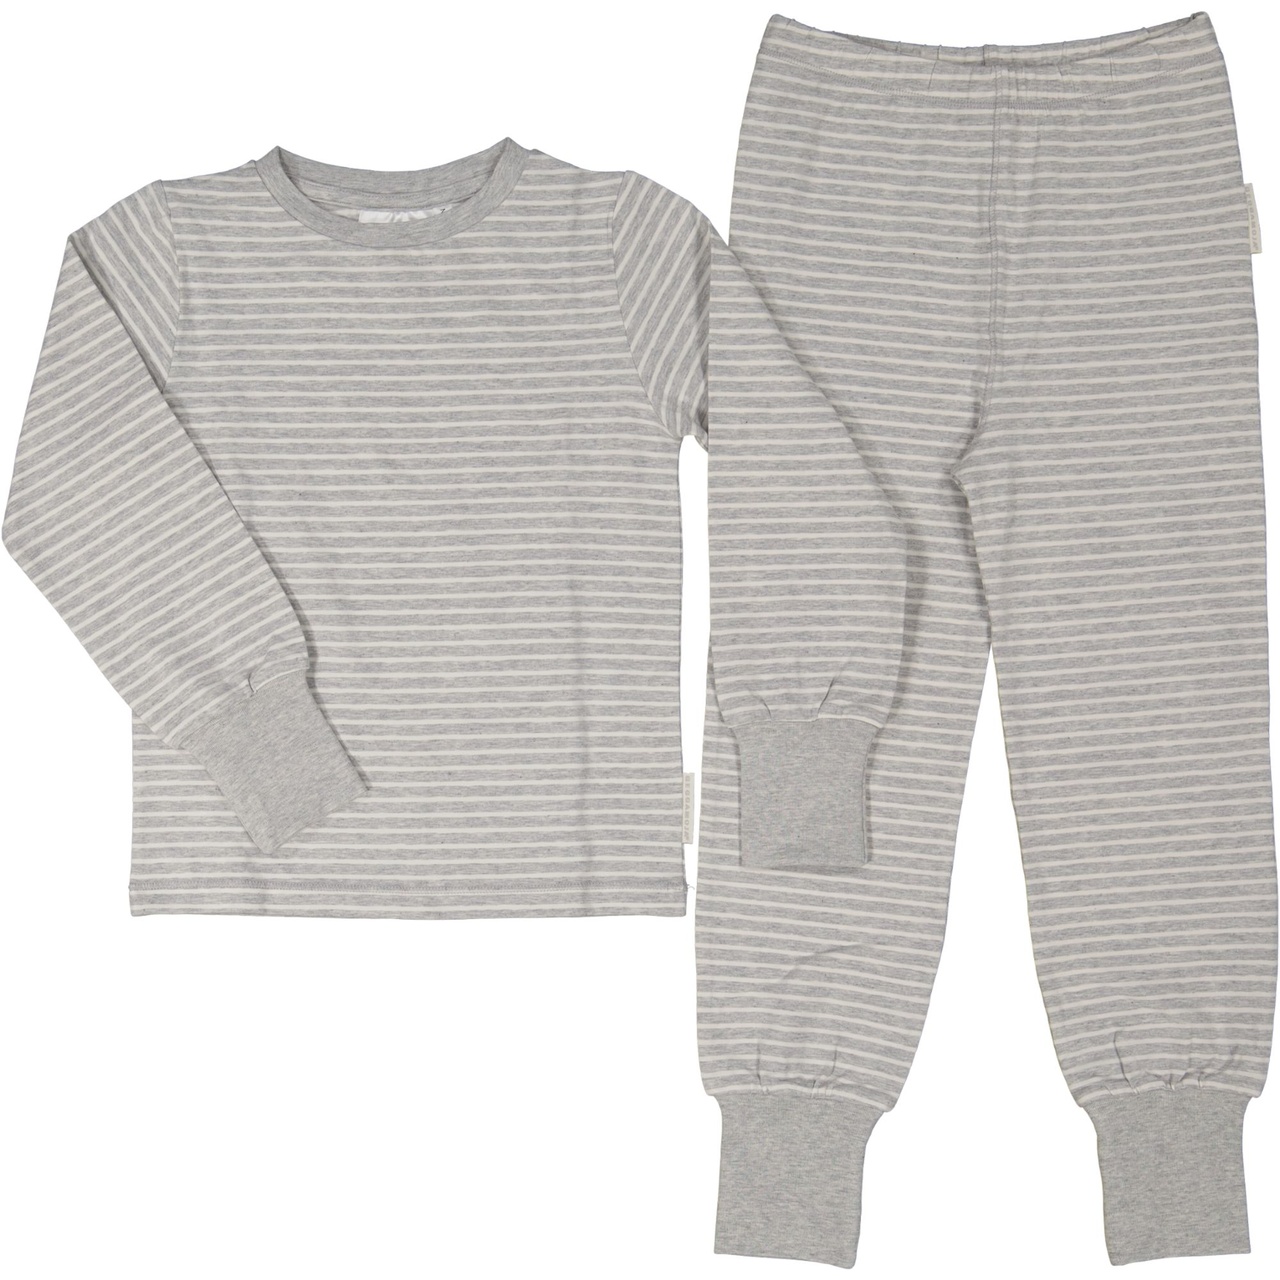 Two pcs pyjamas Classic Grey mel/white 98/104